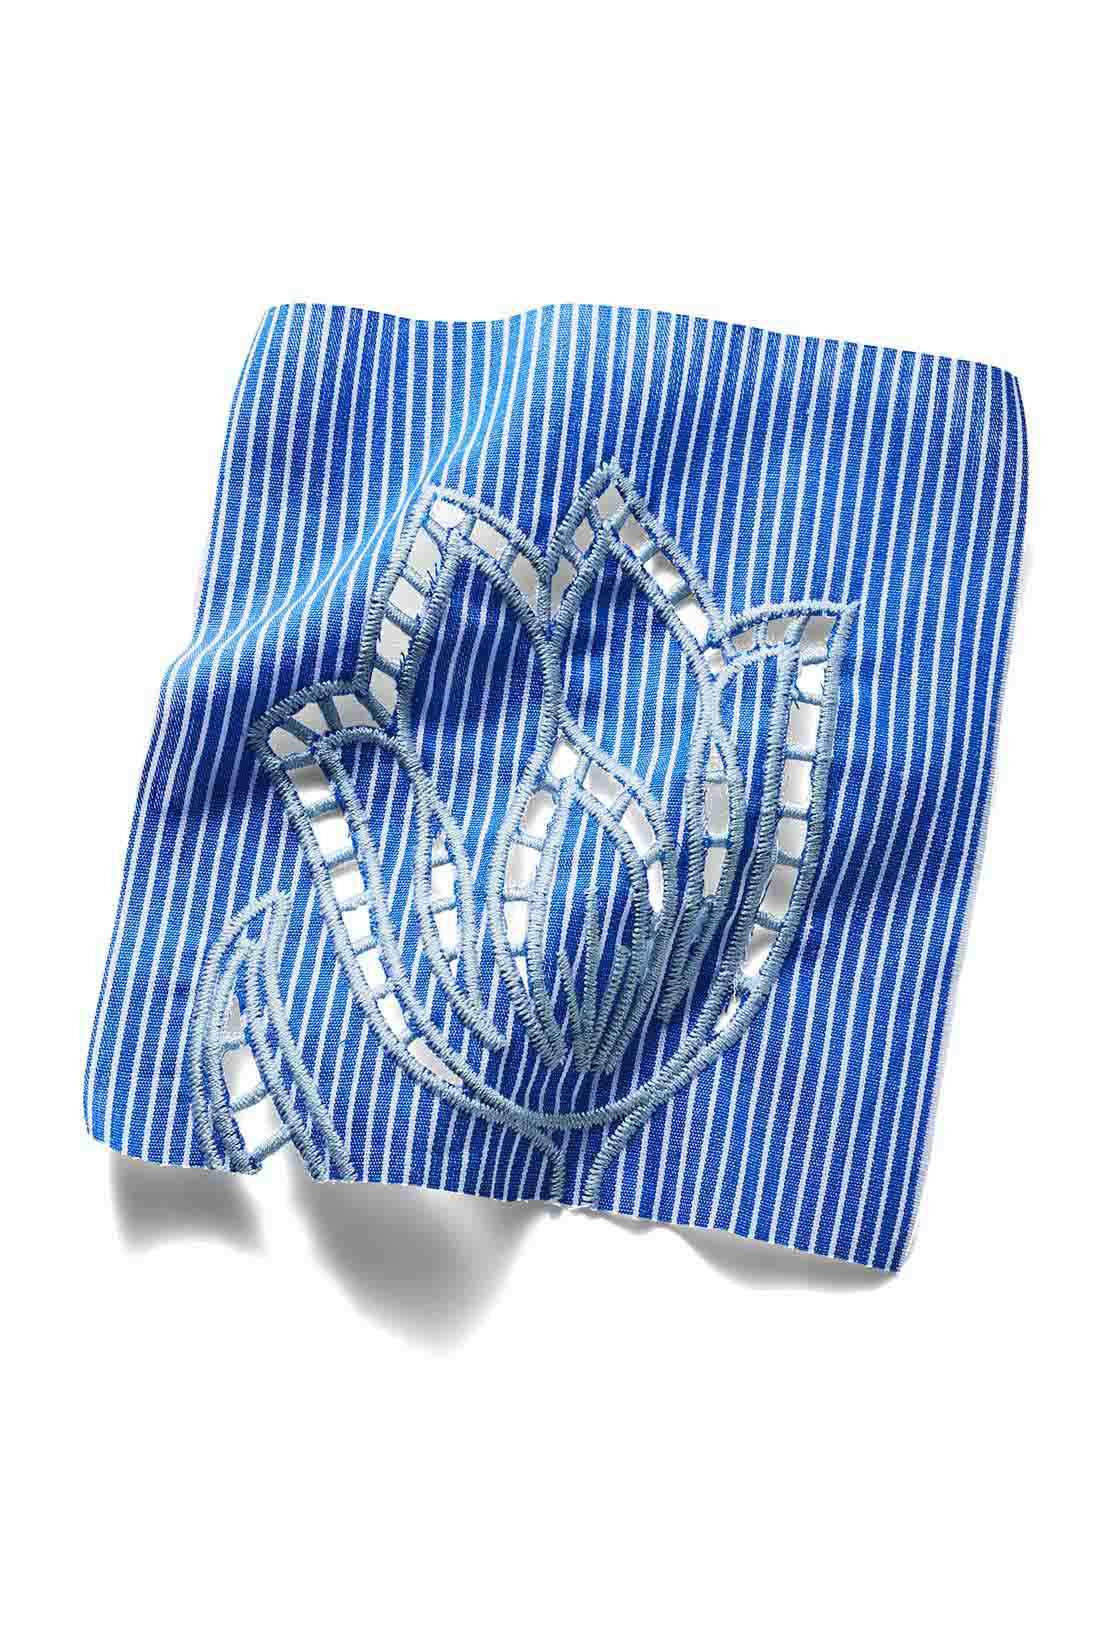 MEDE19F|MEDE19F　カットワーク刺しゅう遣いのクレリックシャツ〈ブルーストライプ〉|細い糸で織られた、綿100％の先染めストライプ生地で上品に。